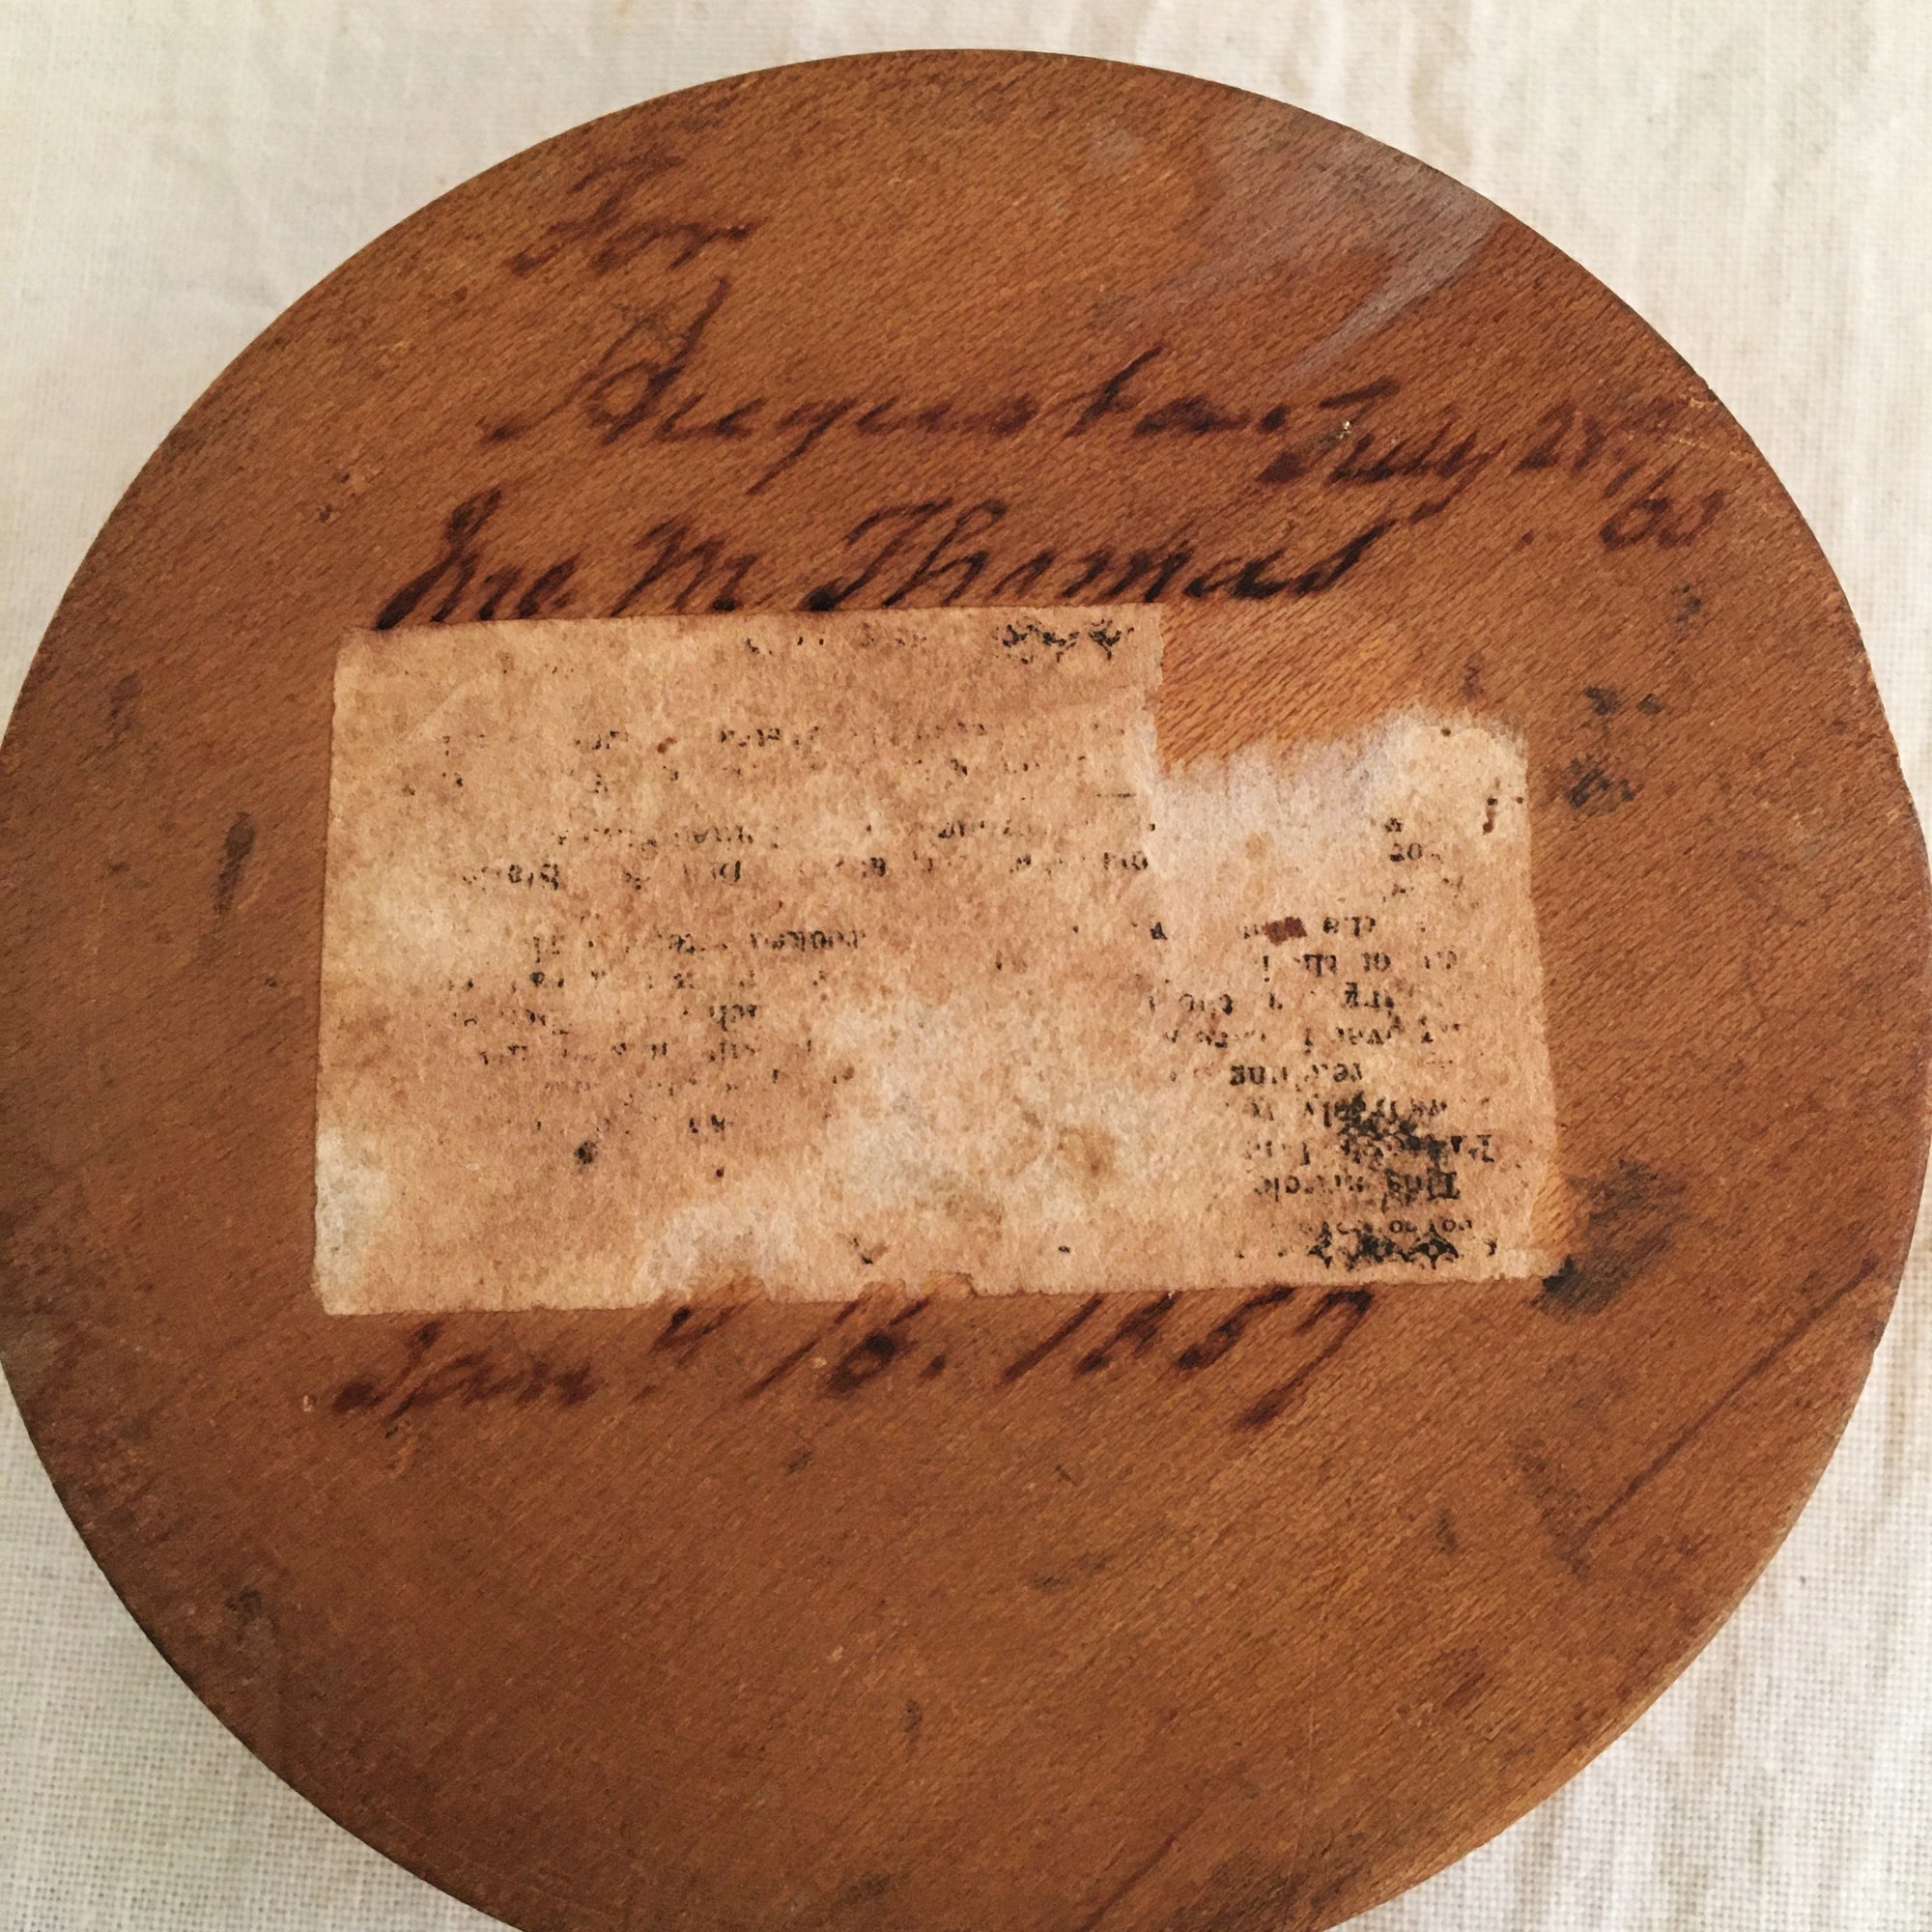 1856 A.L. Williston Cloth Stretcher with Handwritten Inscription